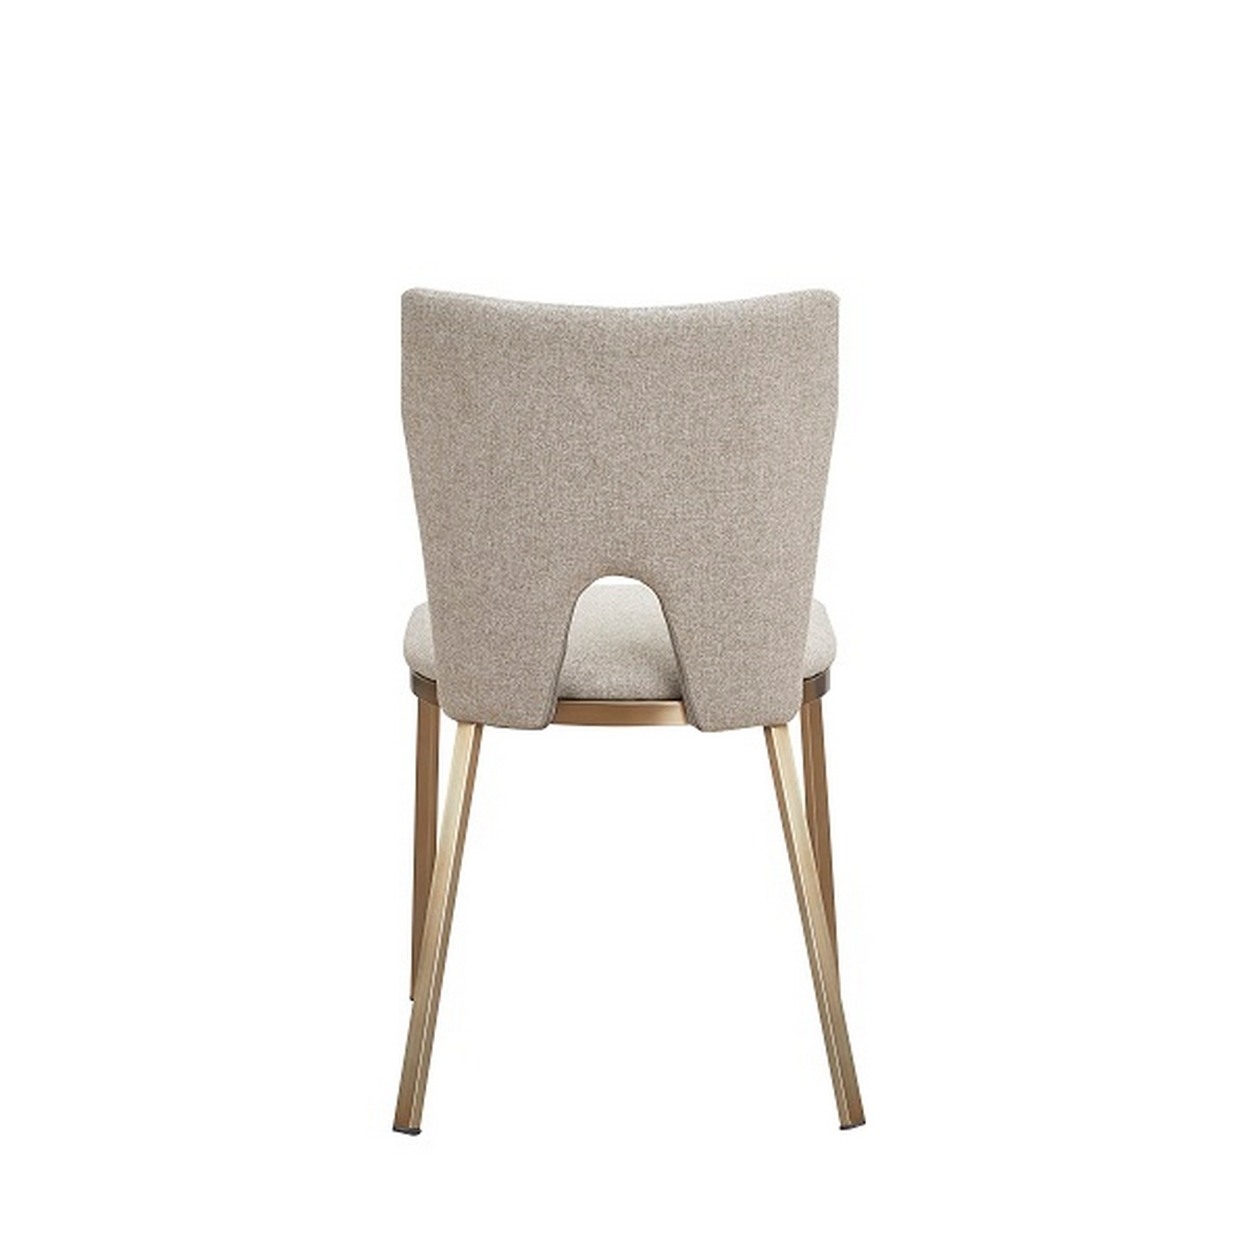 18 Inch Dining Chair, Set Of 2, Gray Fabric, Brass Finished Metal Legs- Saltoro Sherpi